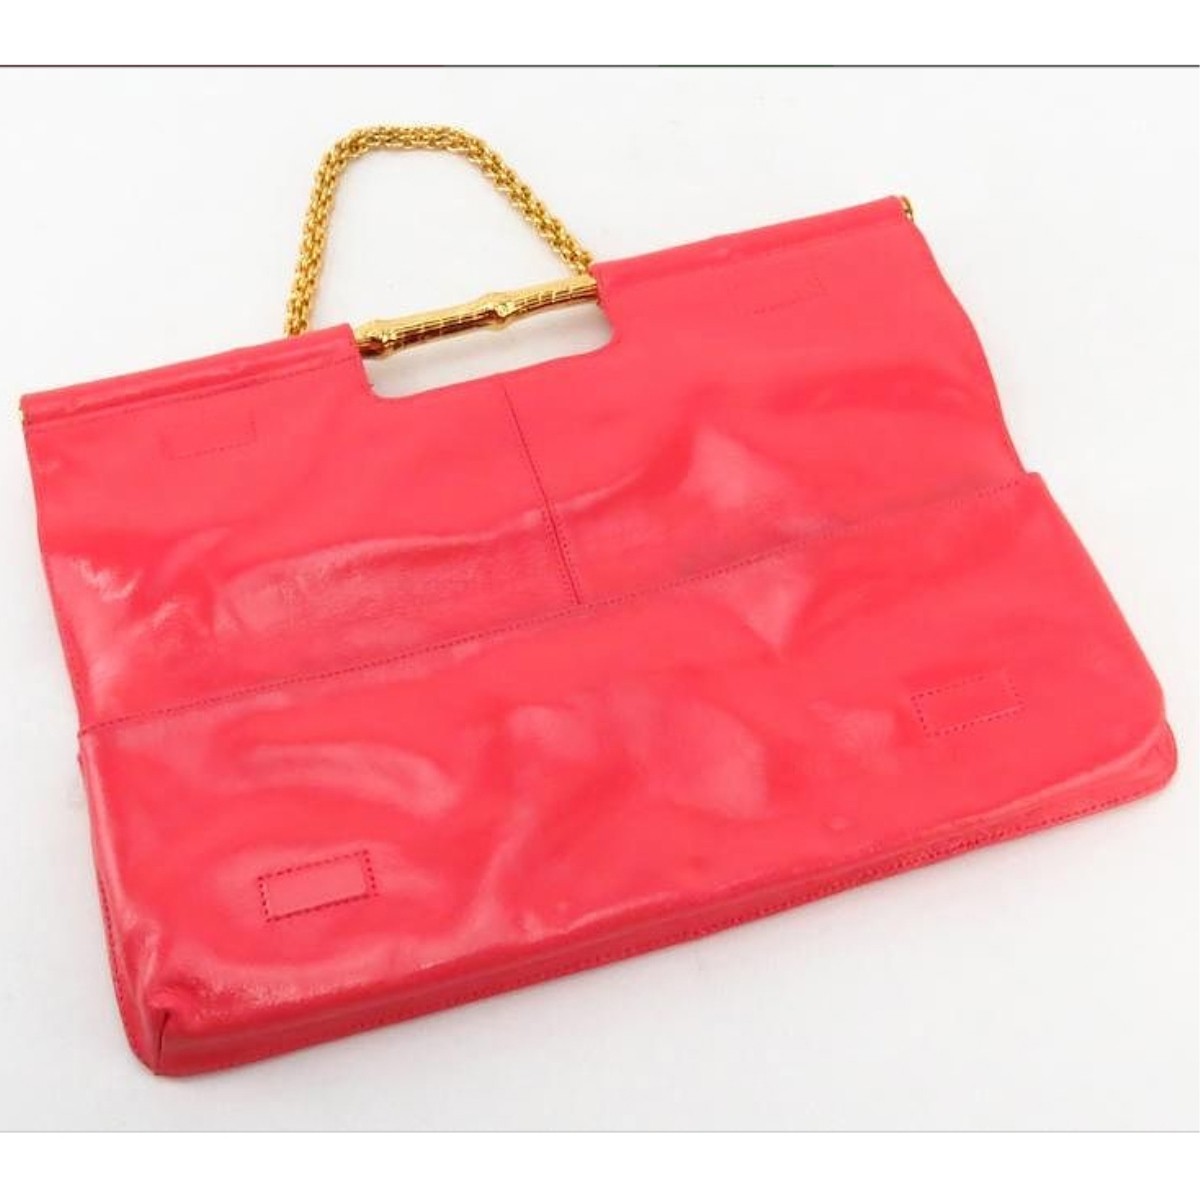 Trina Turk Salmon Pink Patent Leather Clutch